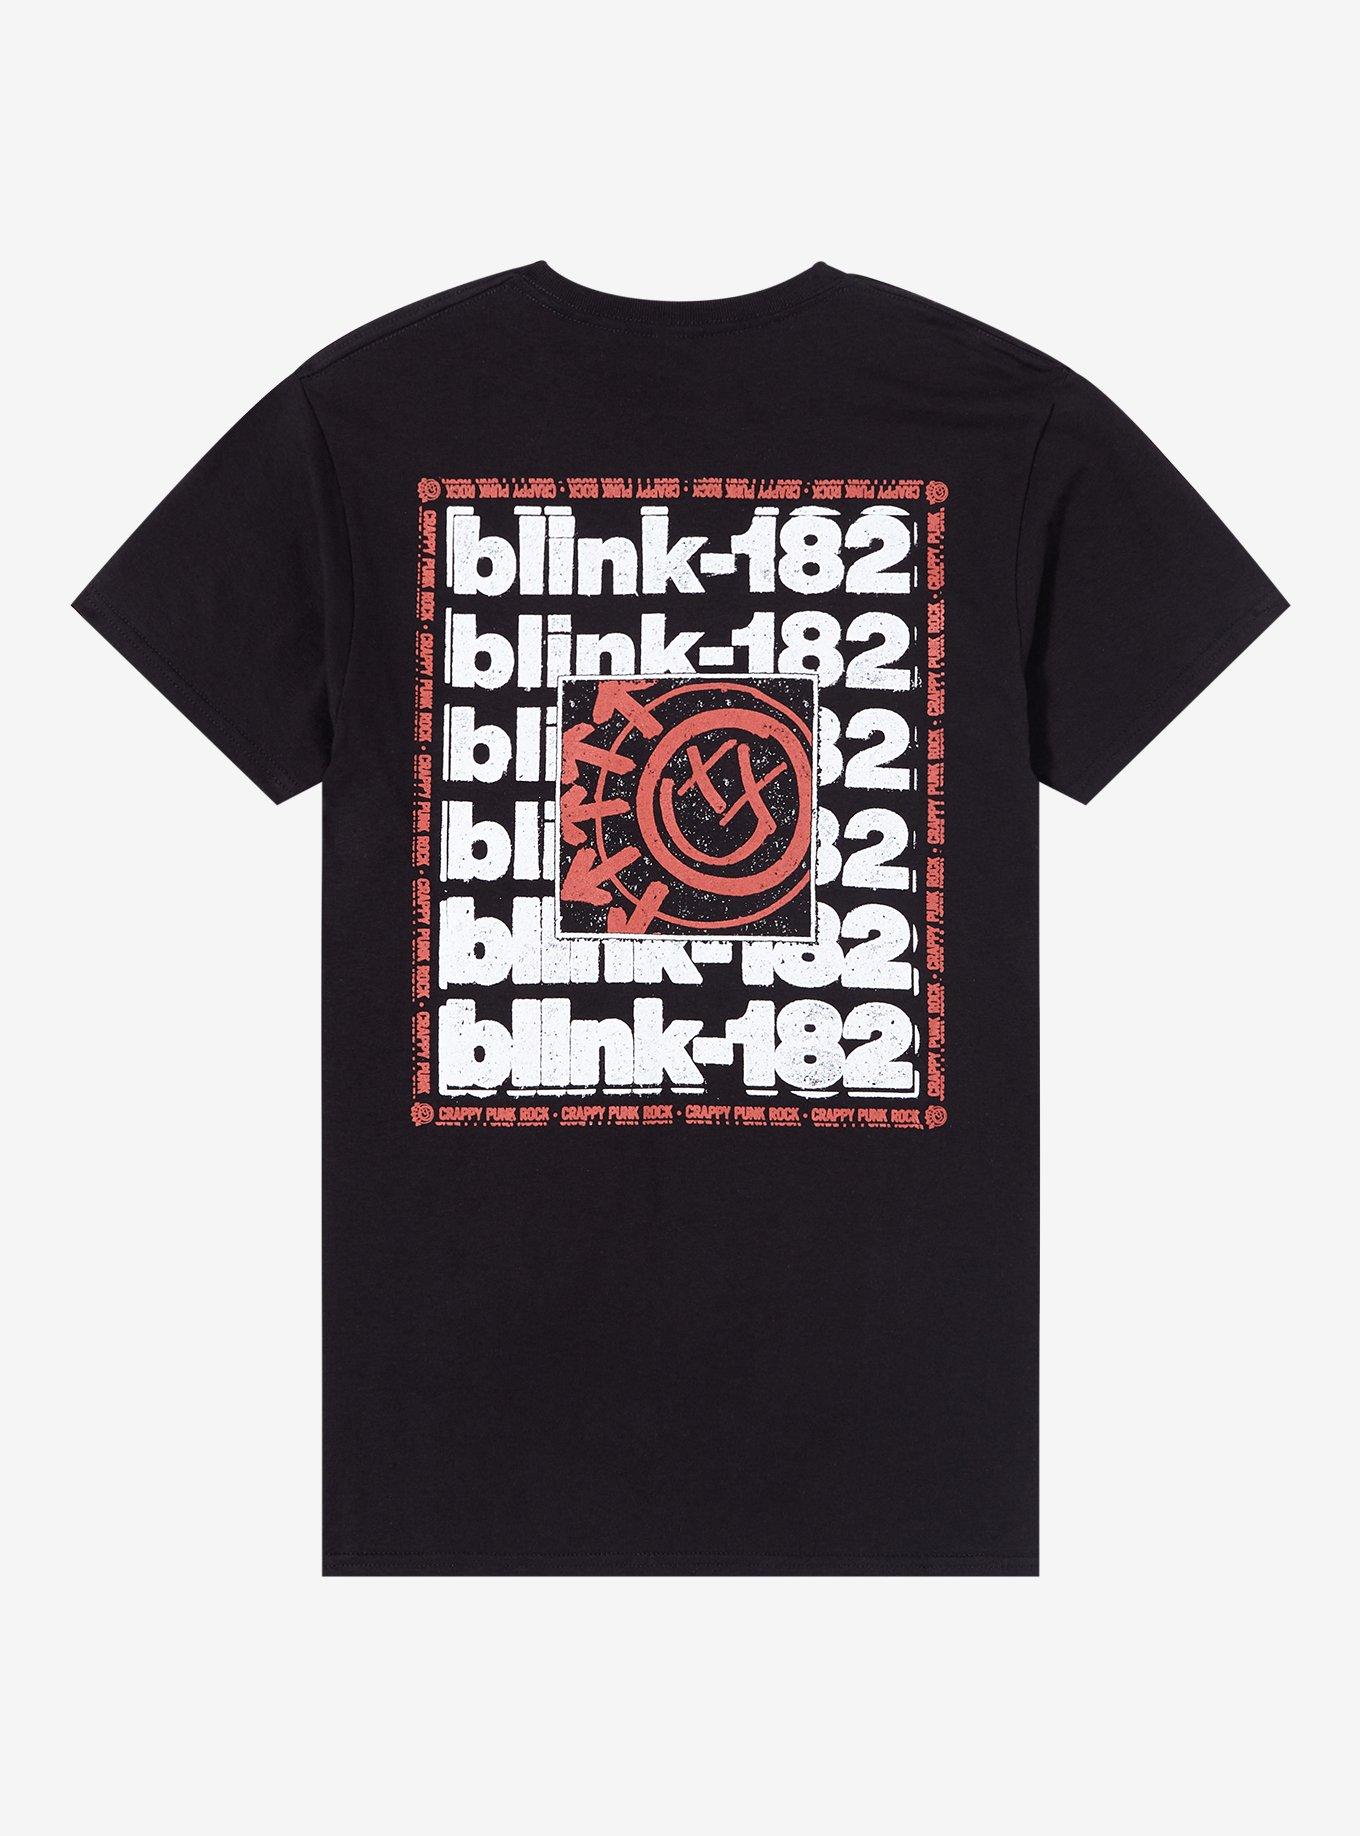 Blink-182 Two-Sided Logo Boyfriend Fit Girls T-Shirt